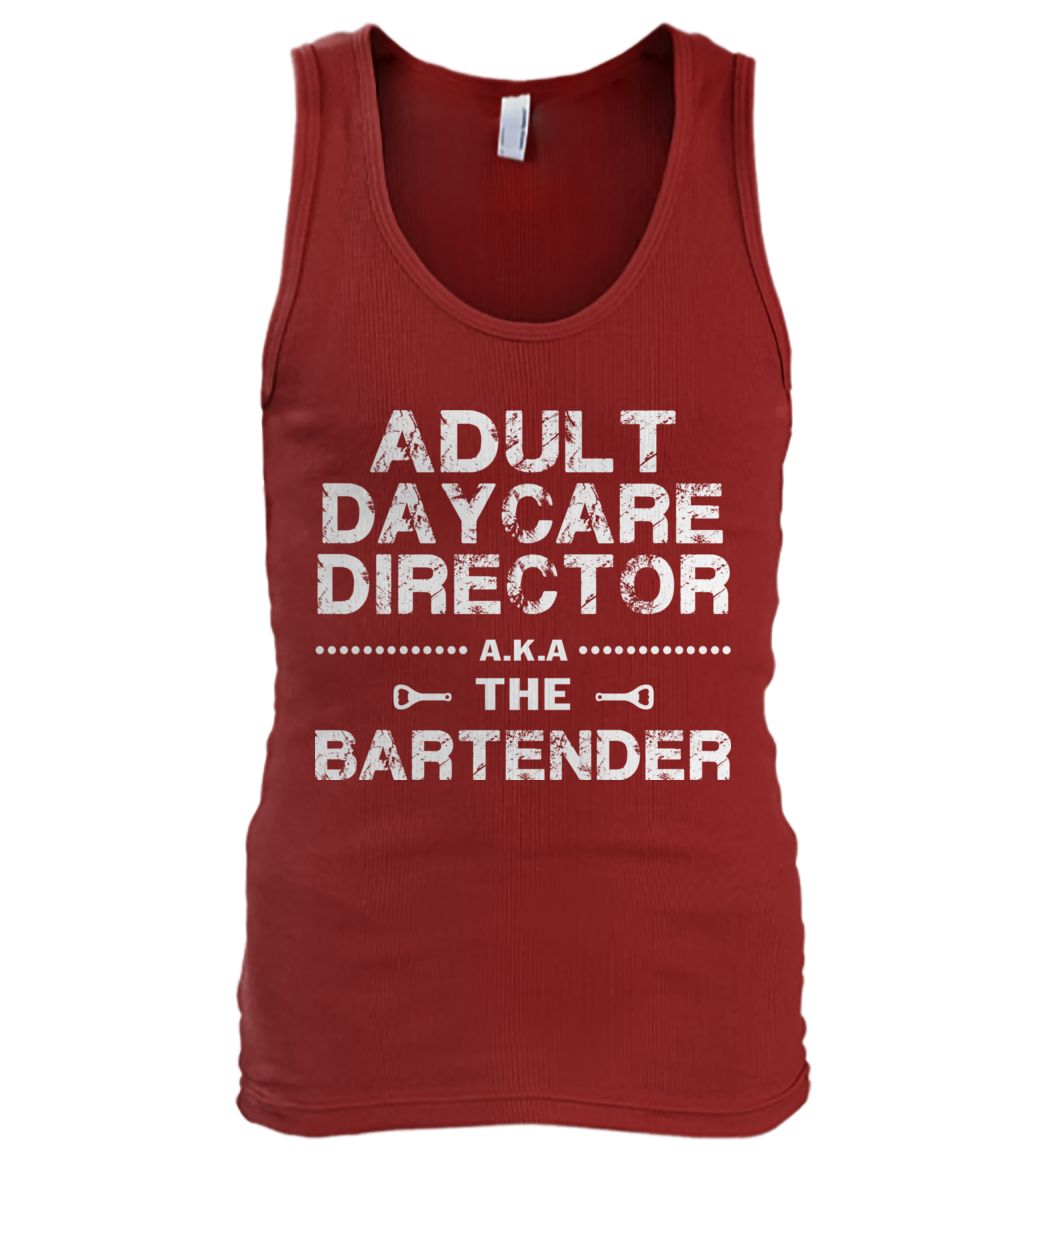 Adult daycare director aka the bartender men's tank top